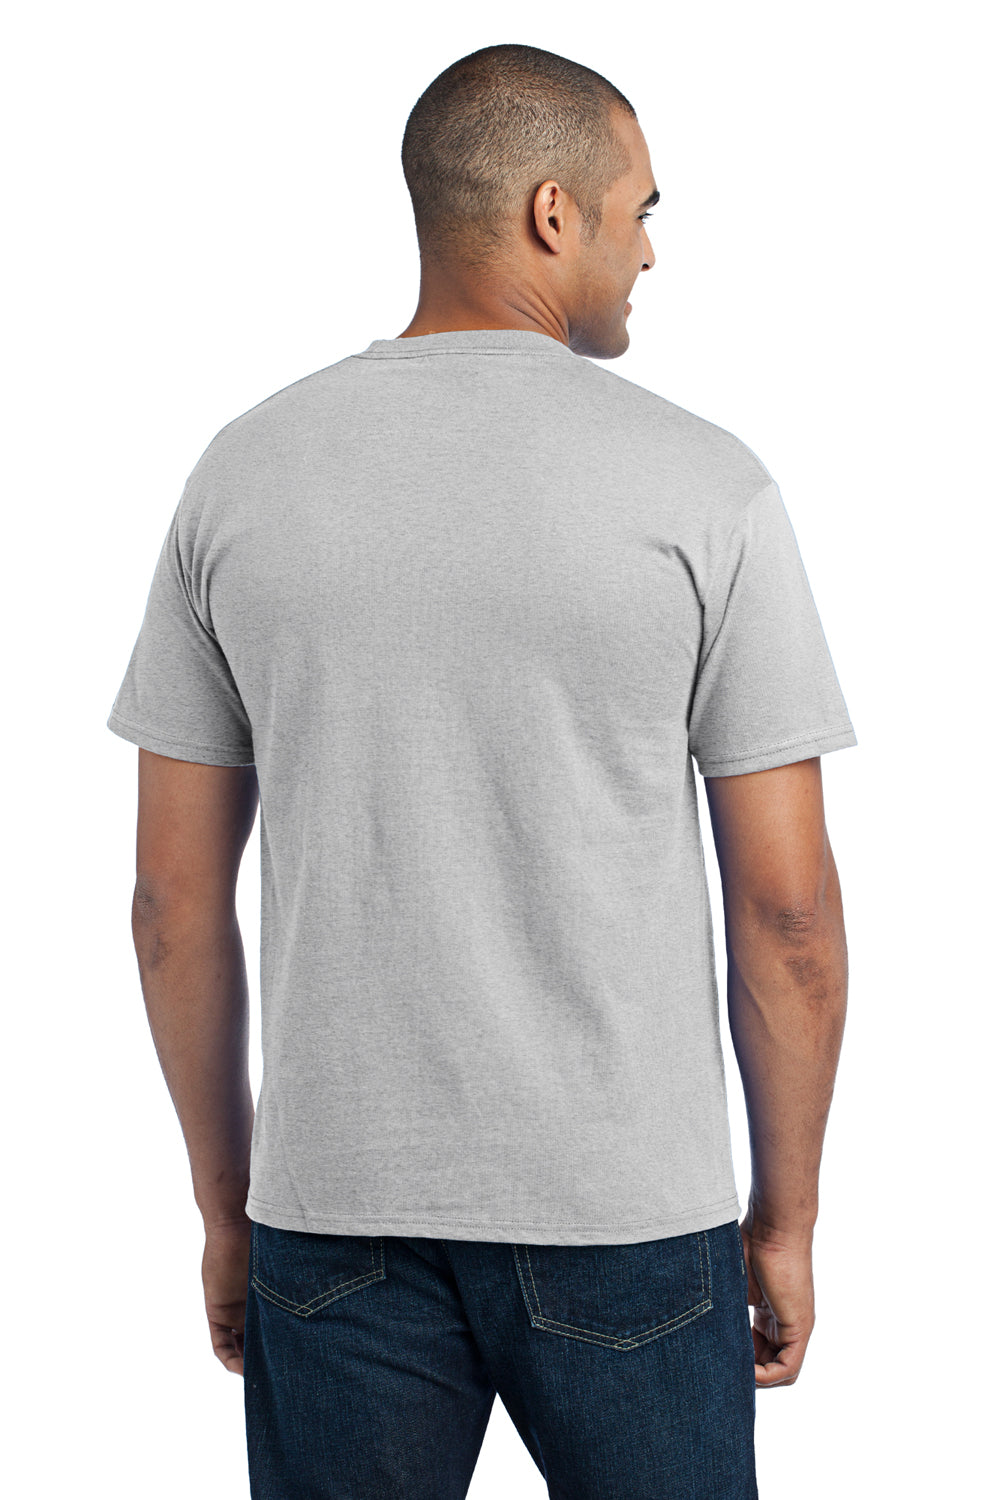 Port & Company PC55P Mens Core Short Sleeve Crewneck T-Shirt w/ Pocket Ash Grey Back